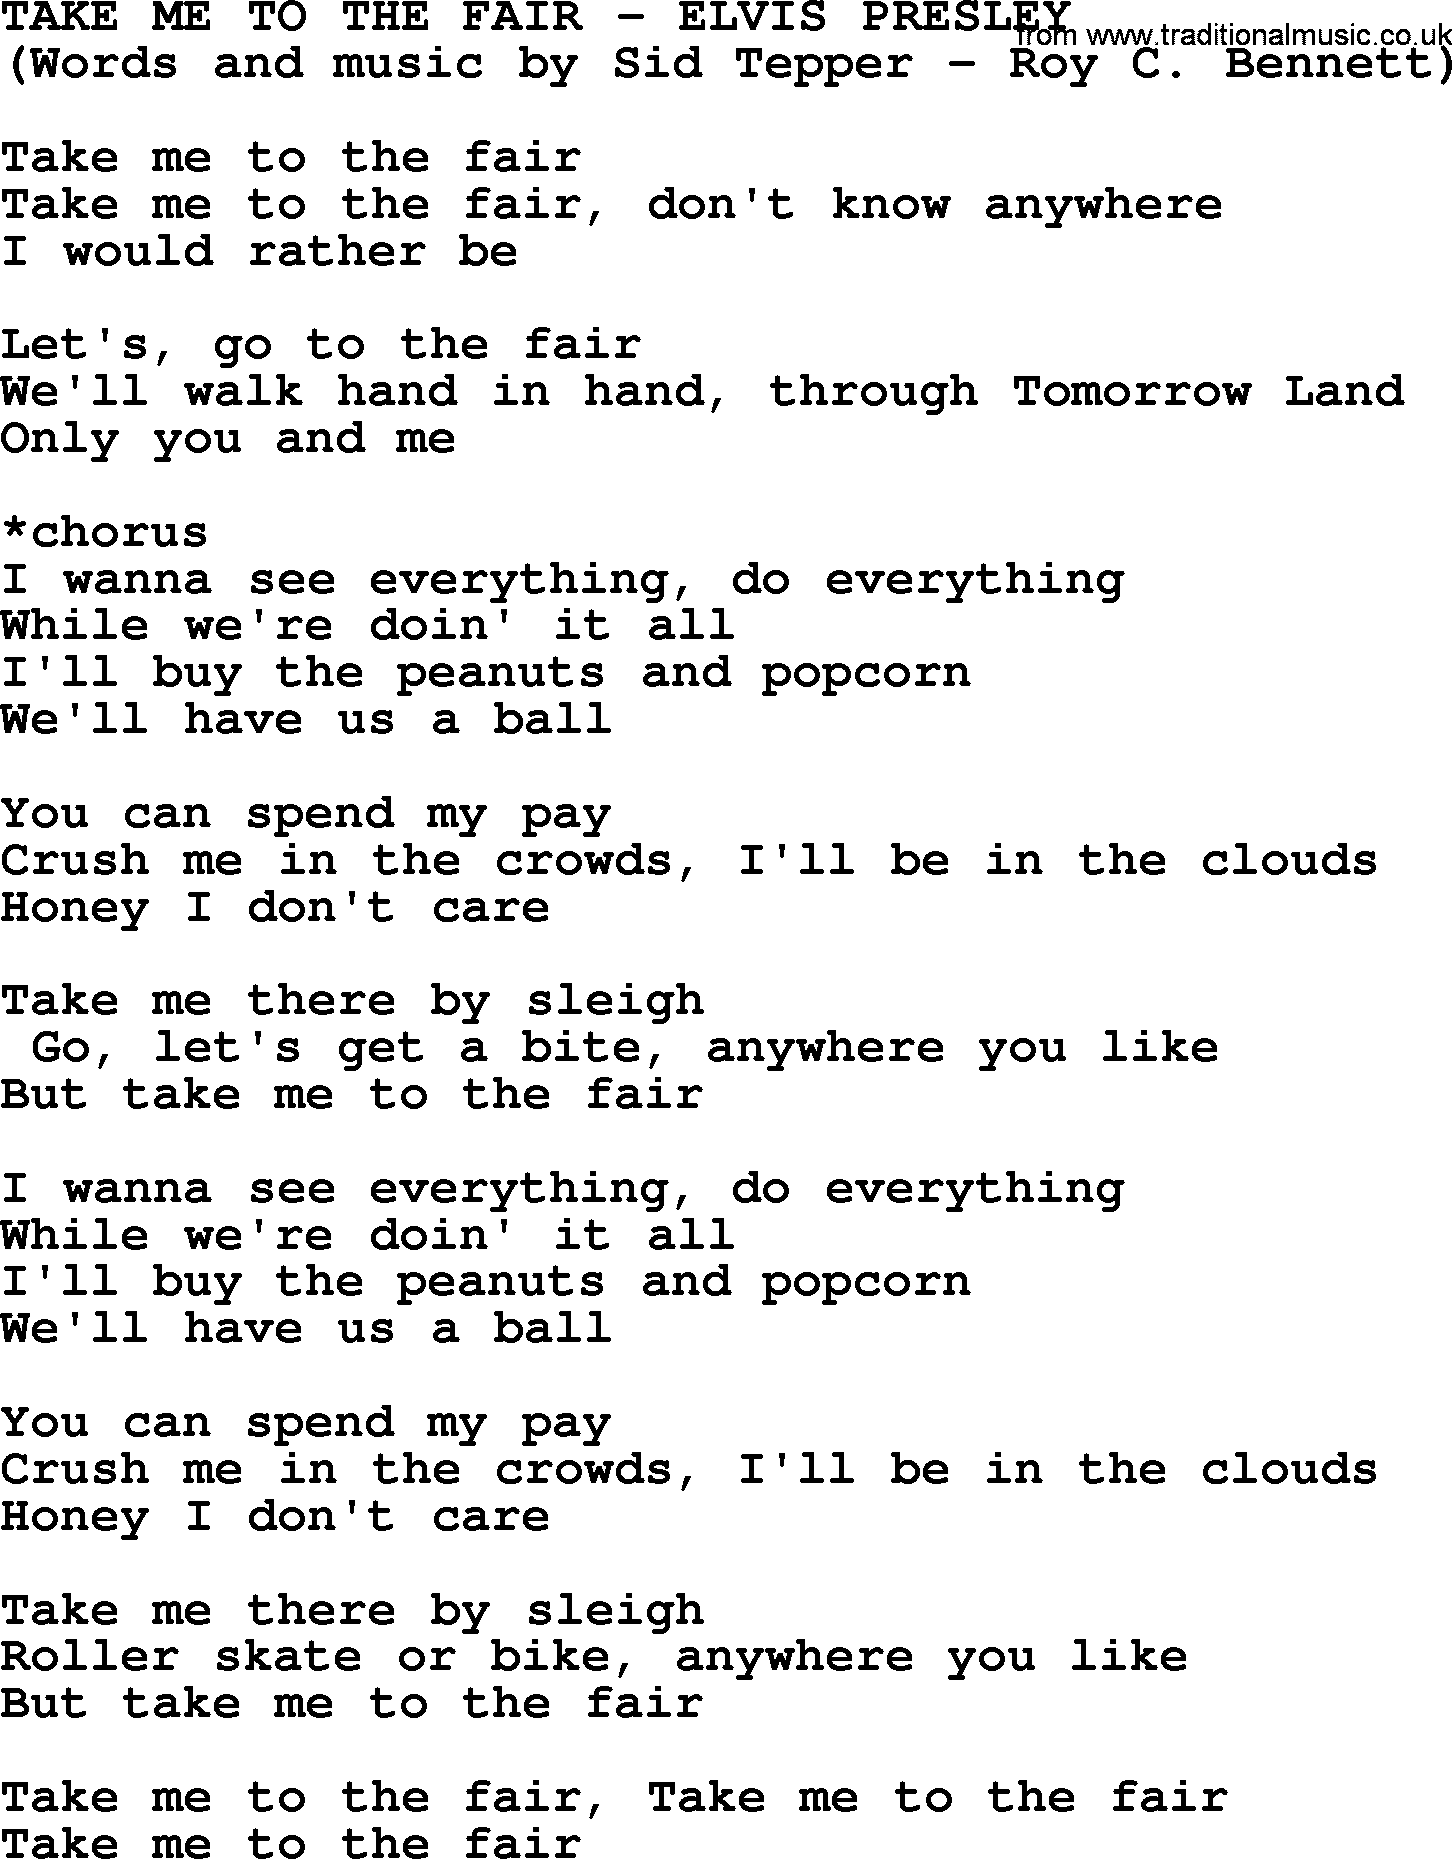 Elvis Presley song: Take Me To The Fair lyrics